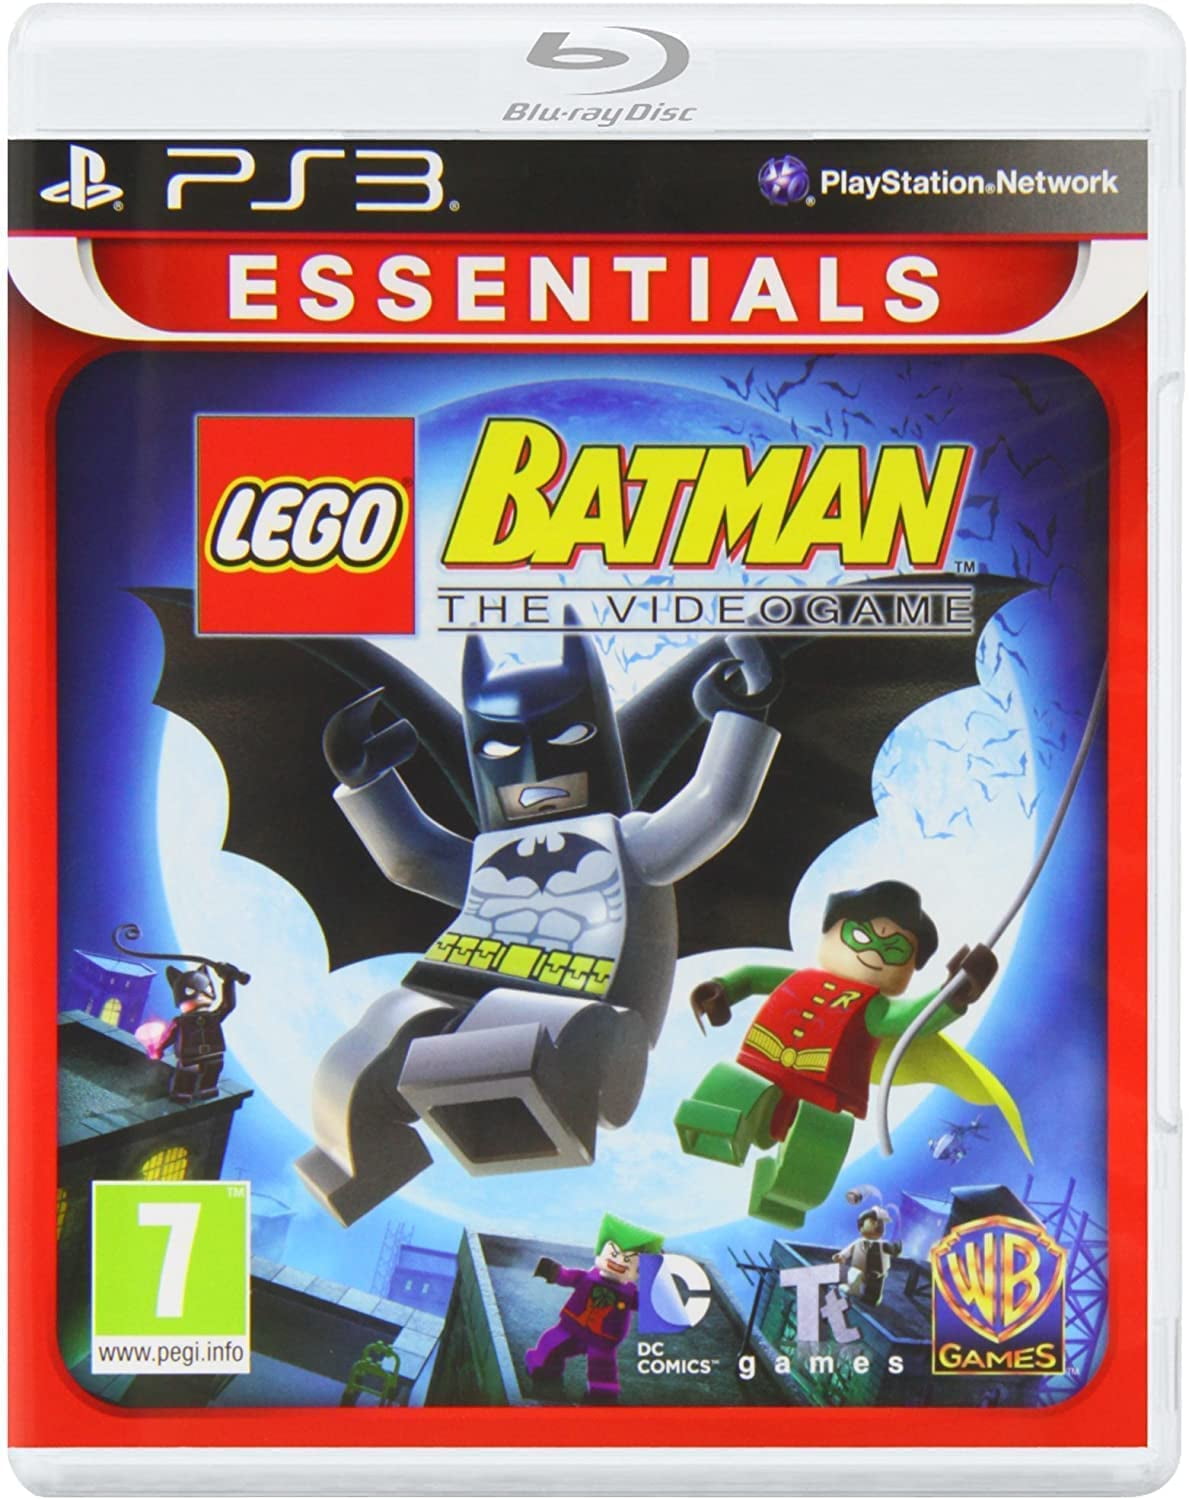 Kit 3 Jogos Lego Aventura Batman Worlds, Jogo de Videogame Ps4 Nunca Usado  88722479